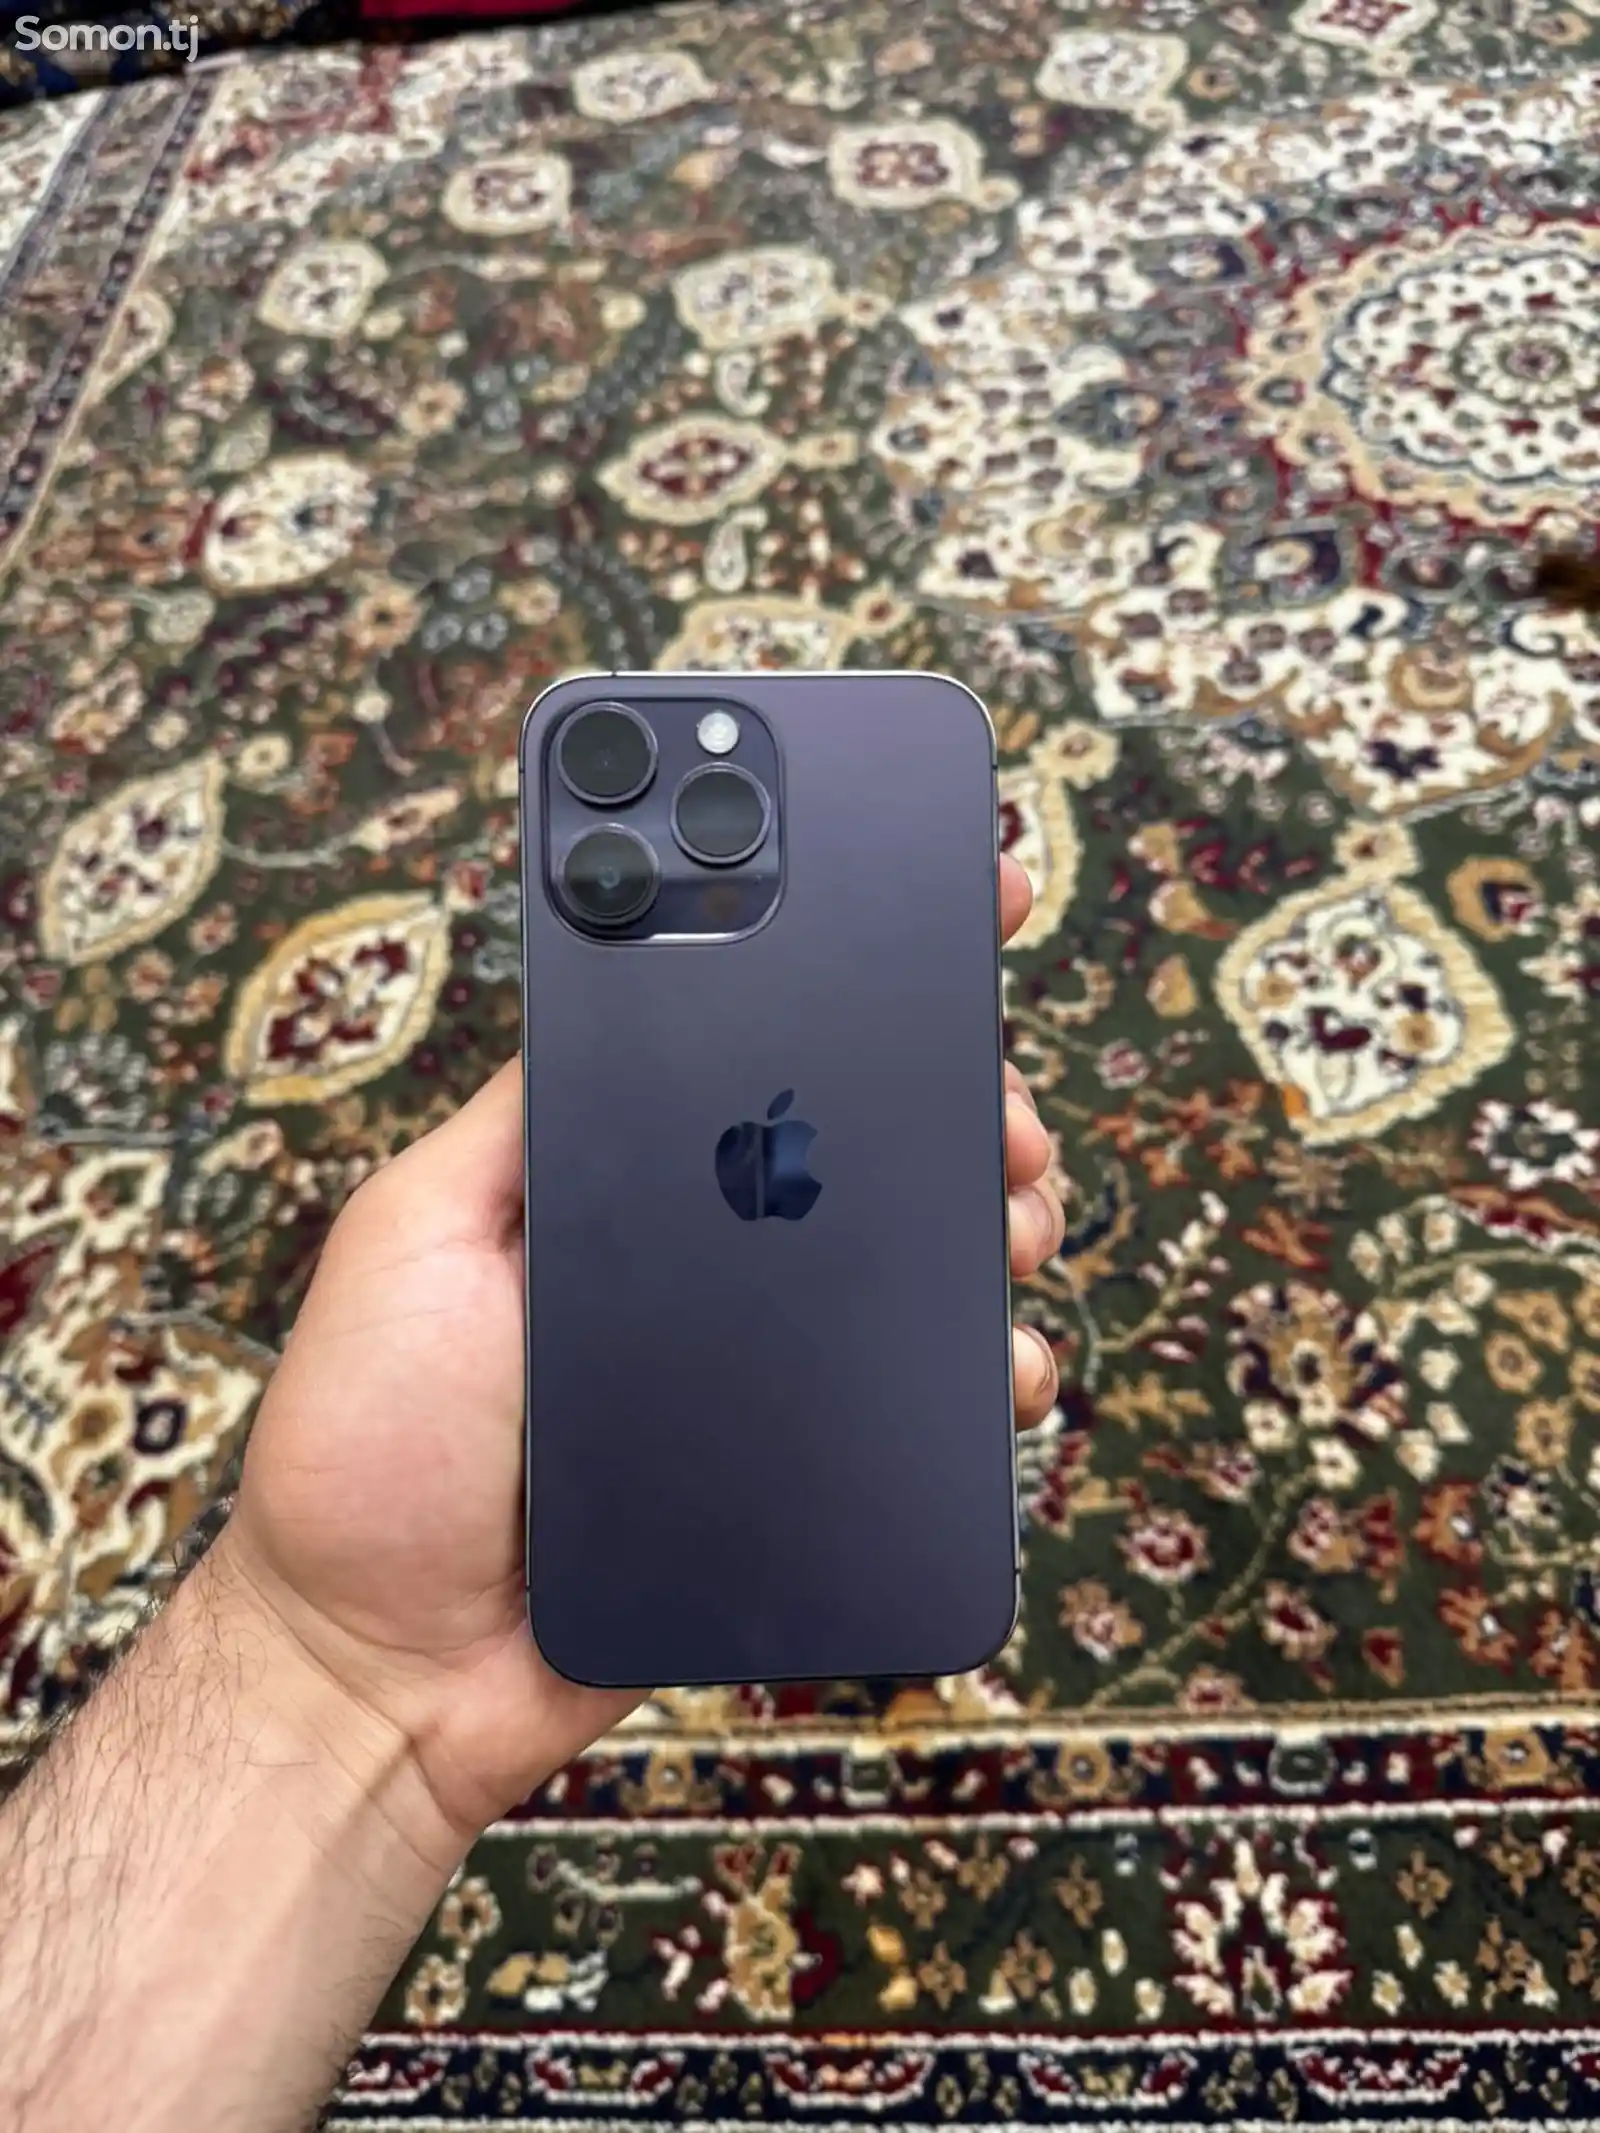 Apple iPhone 14 Pro Max, 256 gb, Deep Purple-3